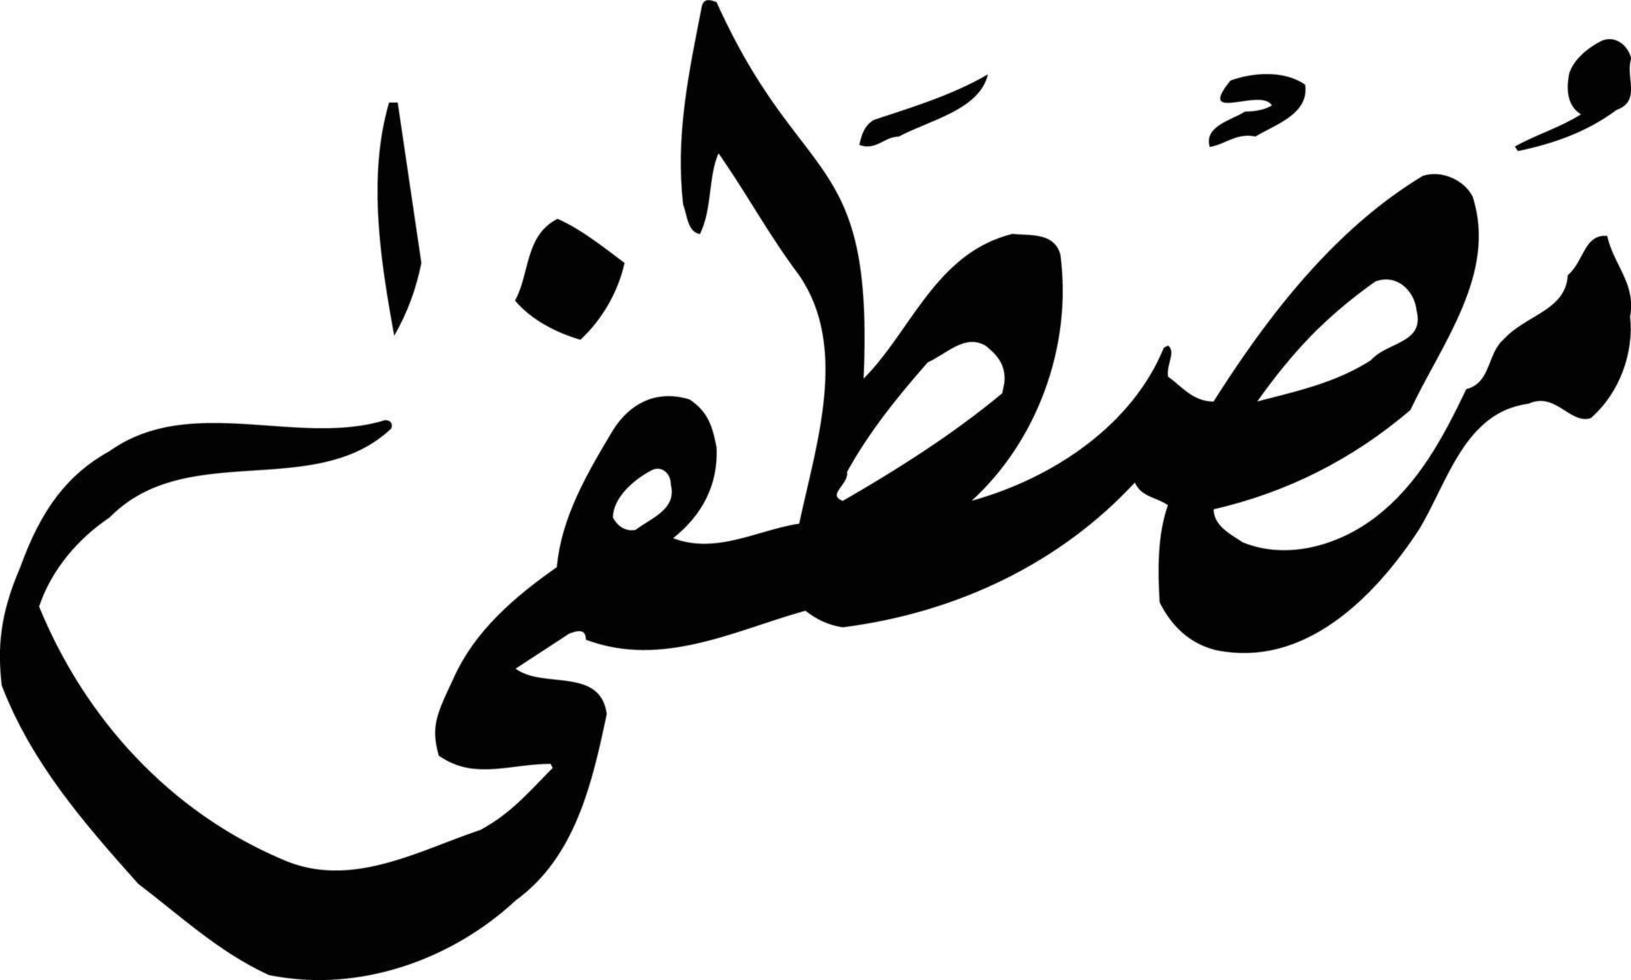 mustafa titre calligraphie arabe islamique vecteur gratuit